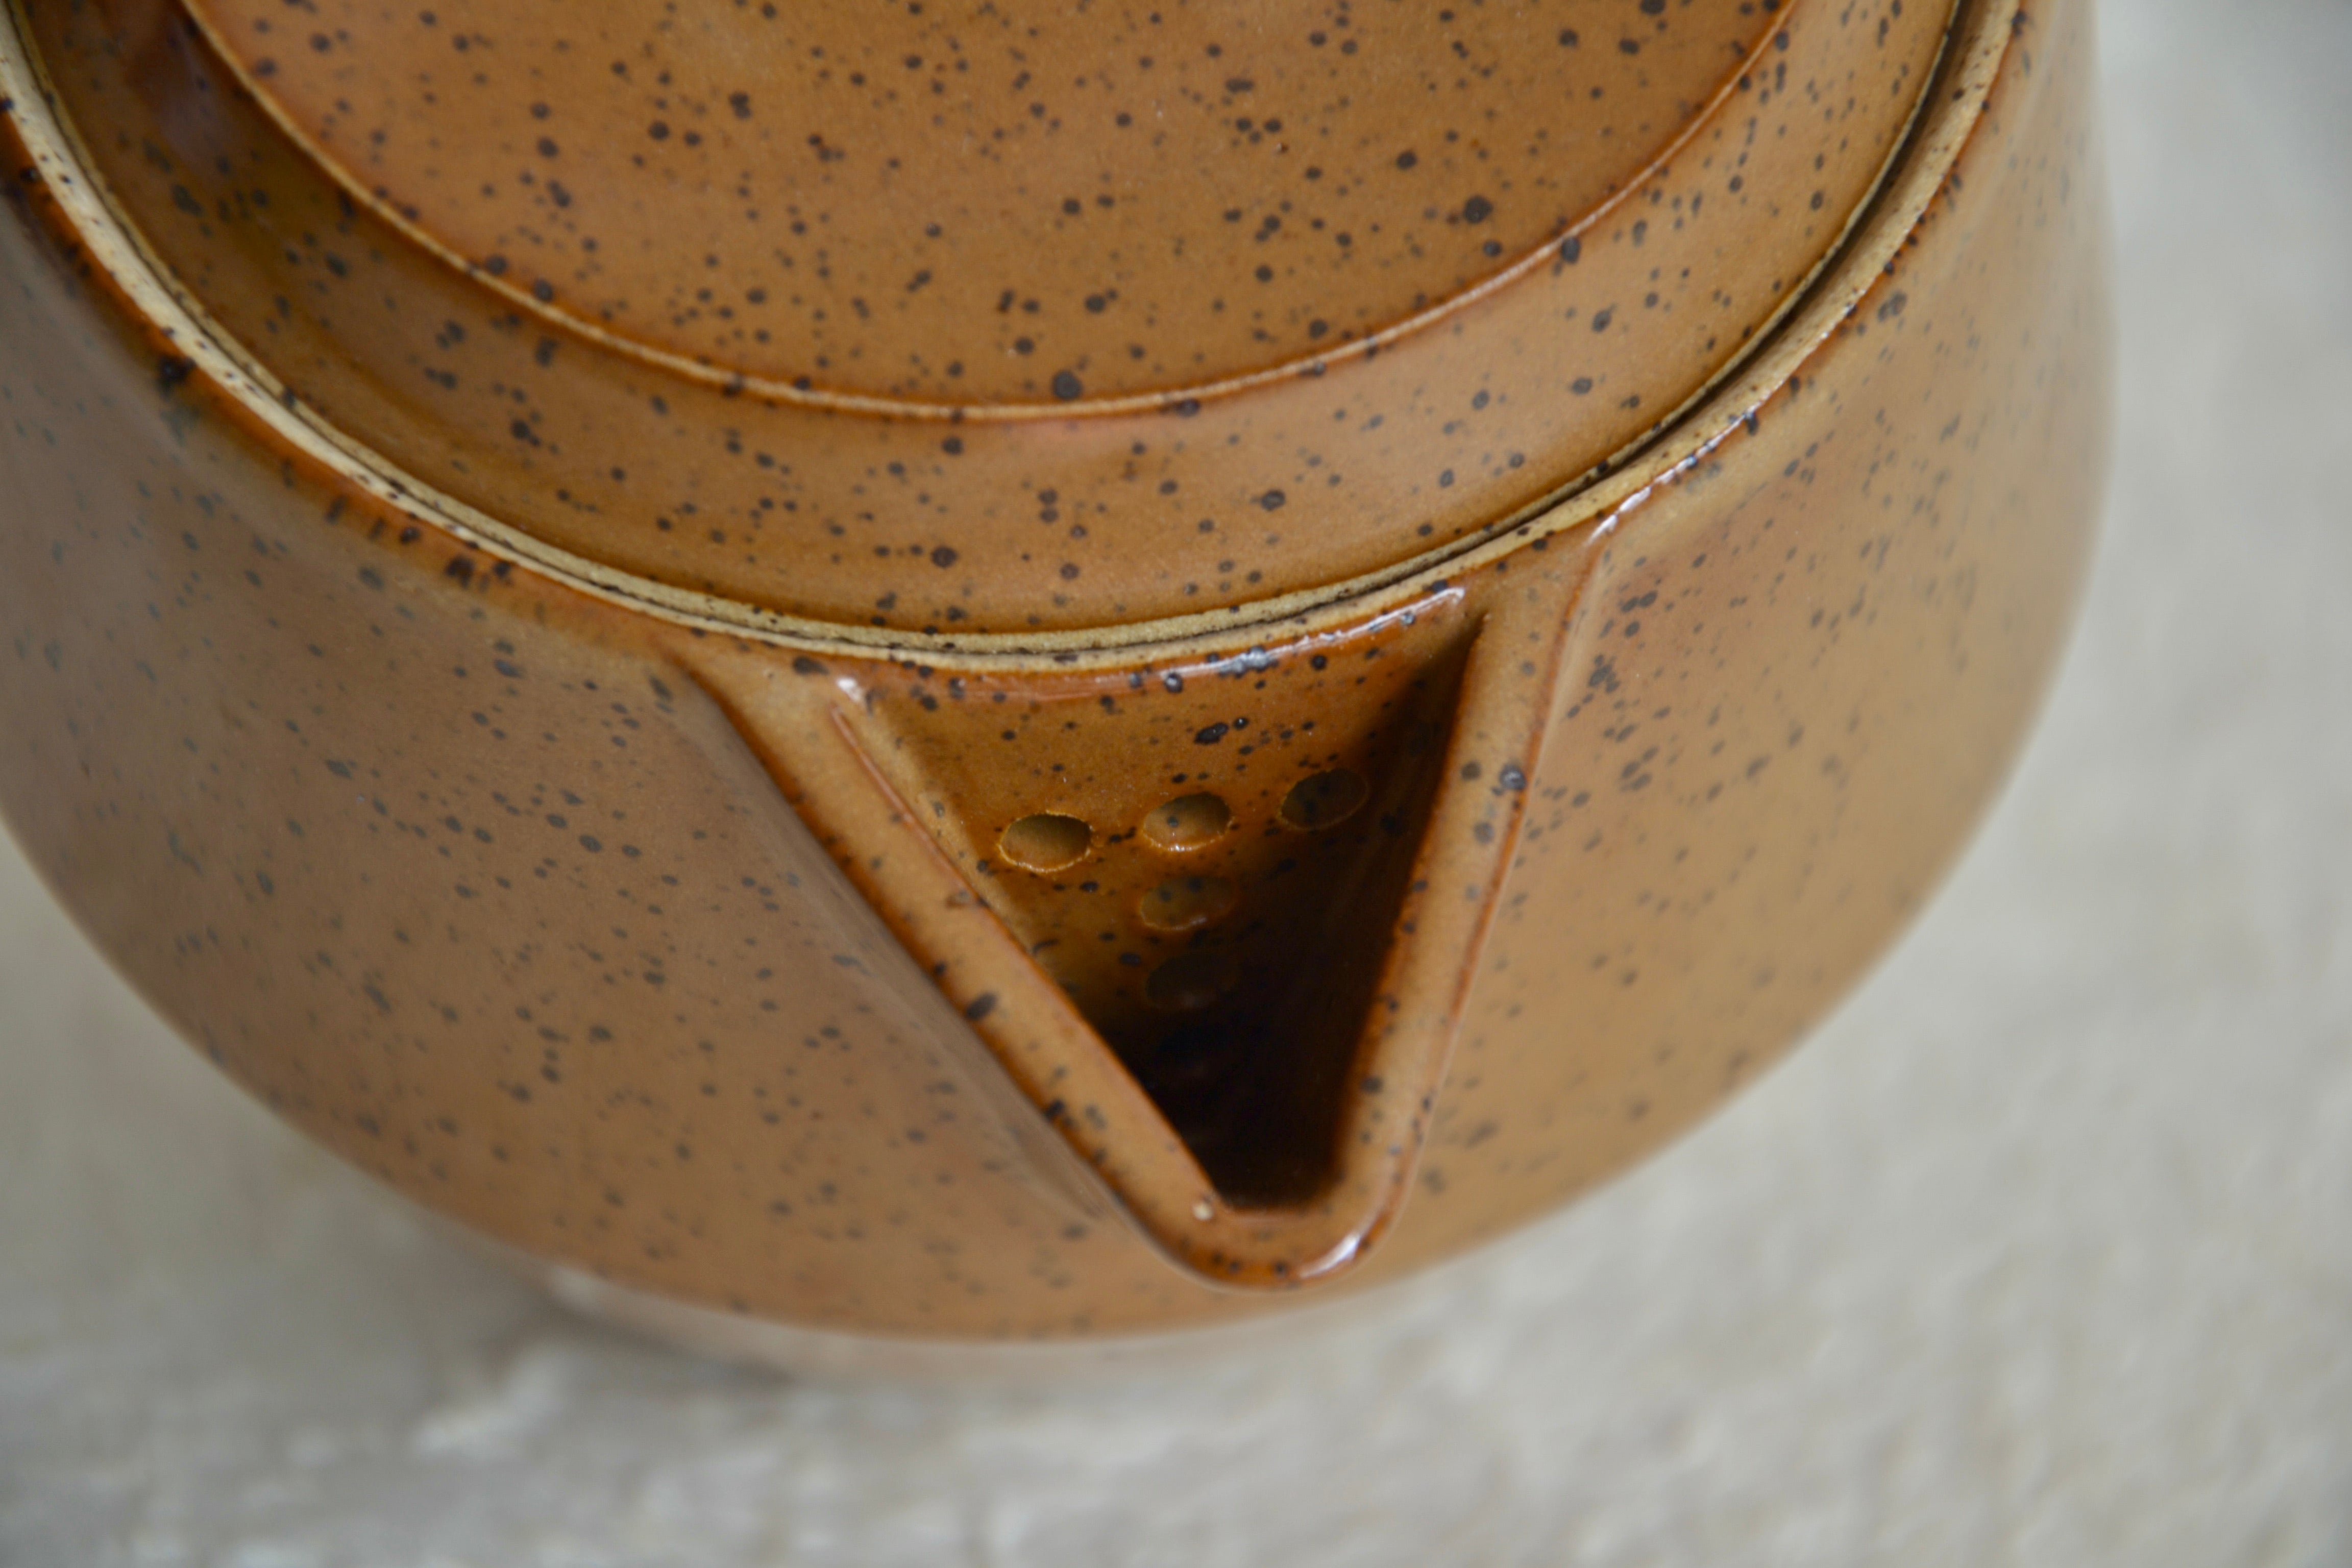 Teapot: Retro Mustard Speckle